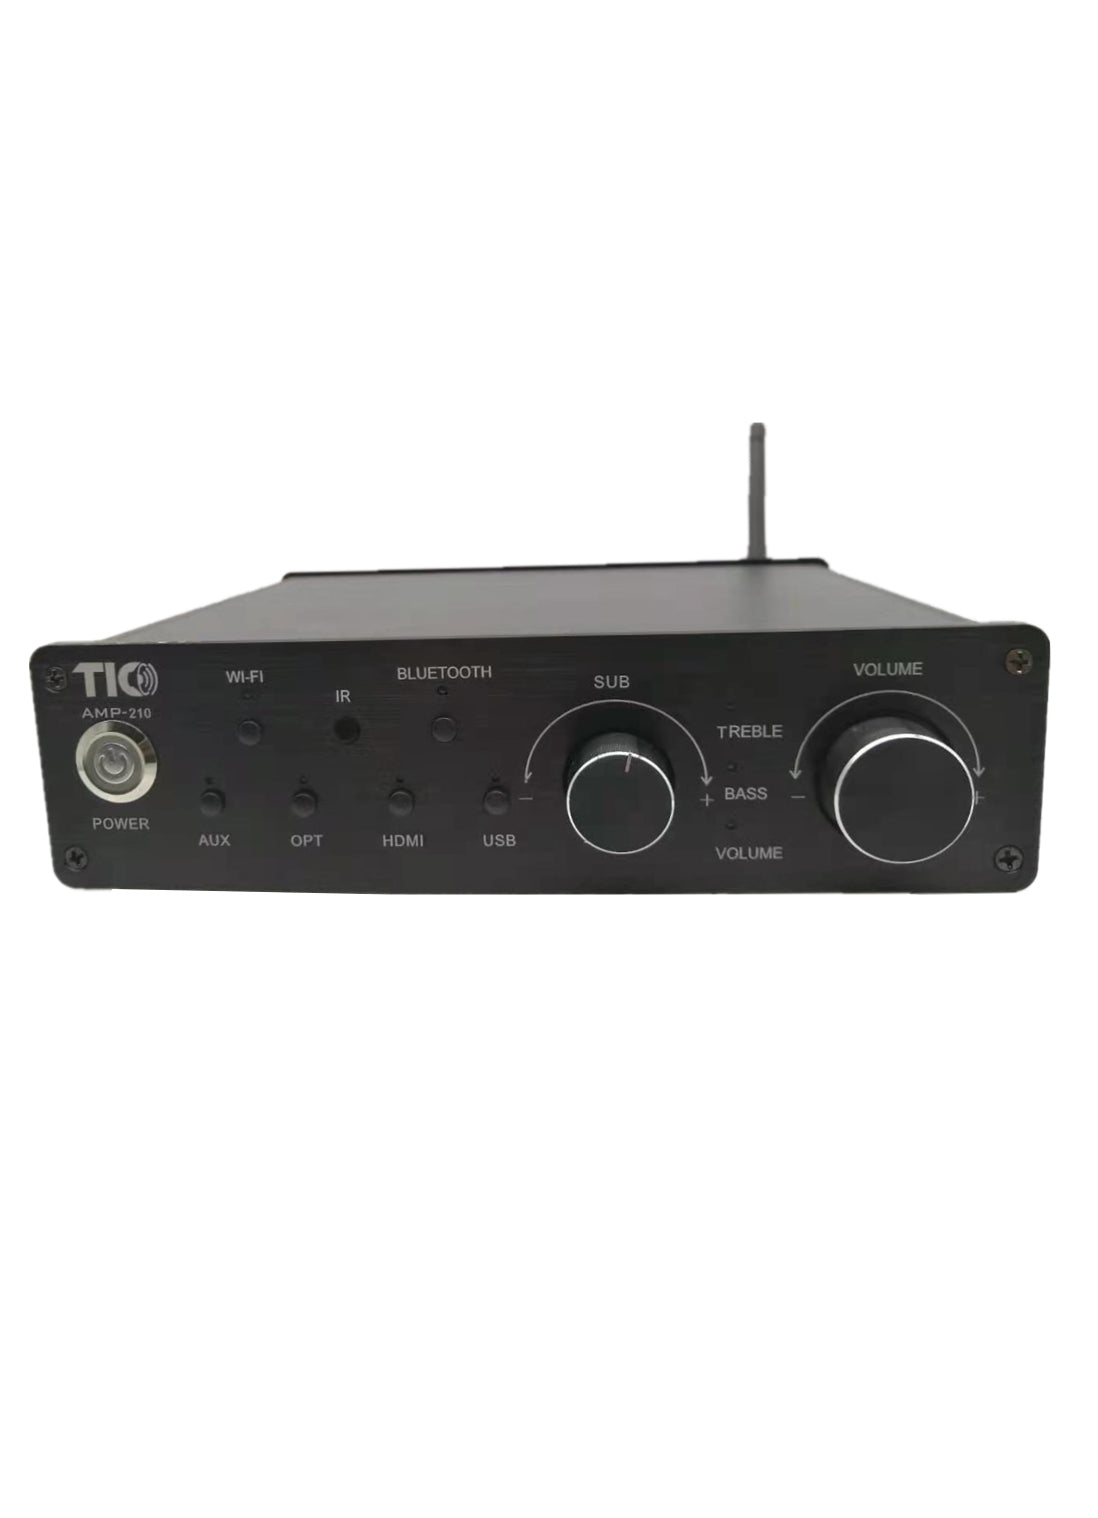 Amp: The Wireless Streaming Speaker Amplifier